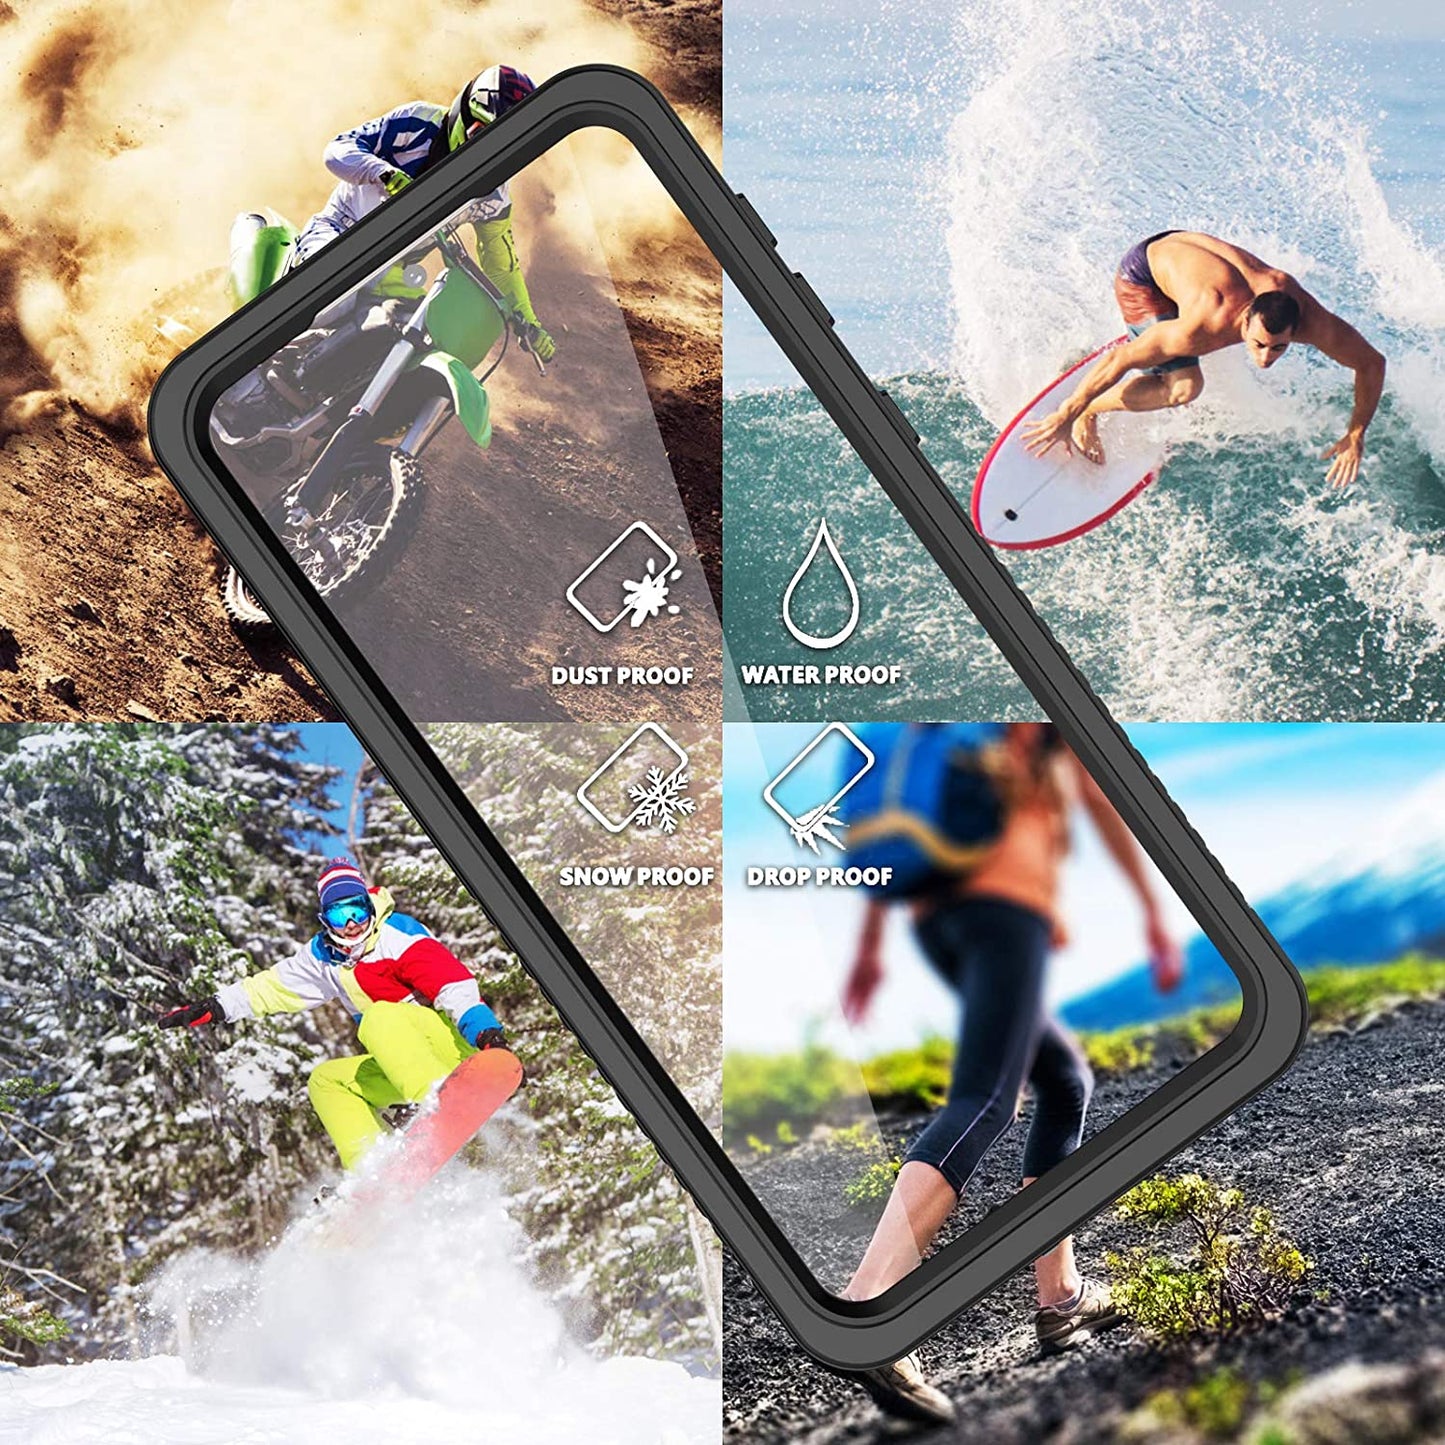 OAKTREE Samsung Galaxy S21 Ultra 6.8 inch Shockproof Waterproof Rugged Case - Black/Clear